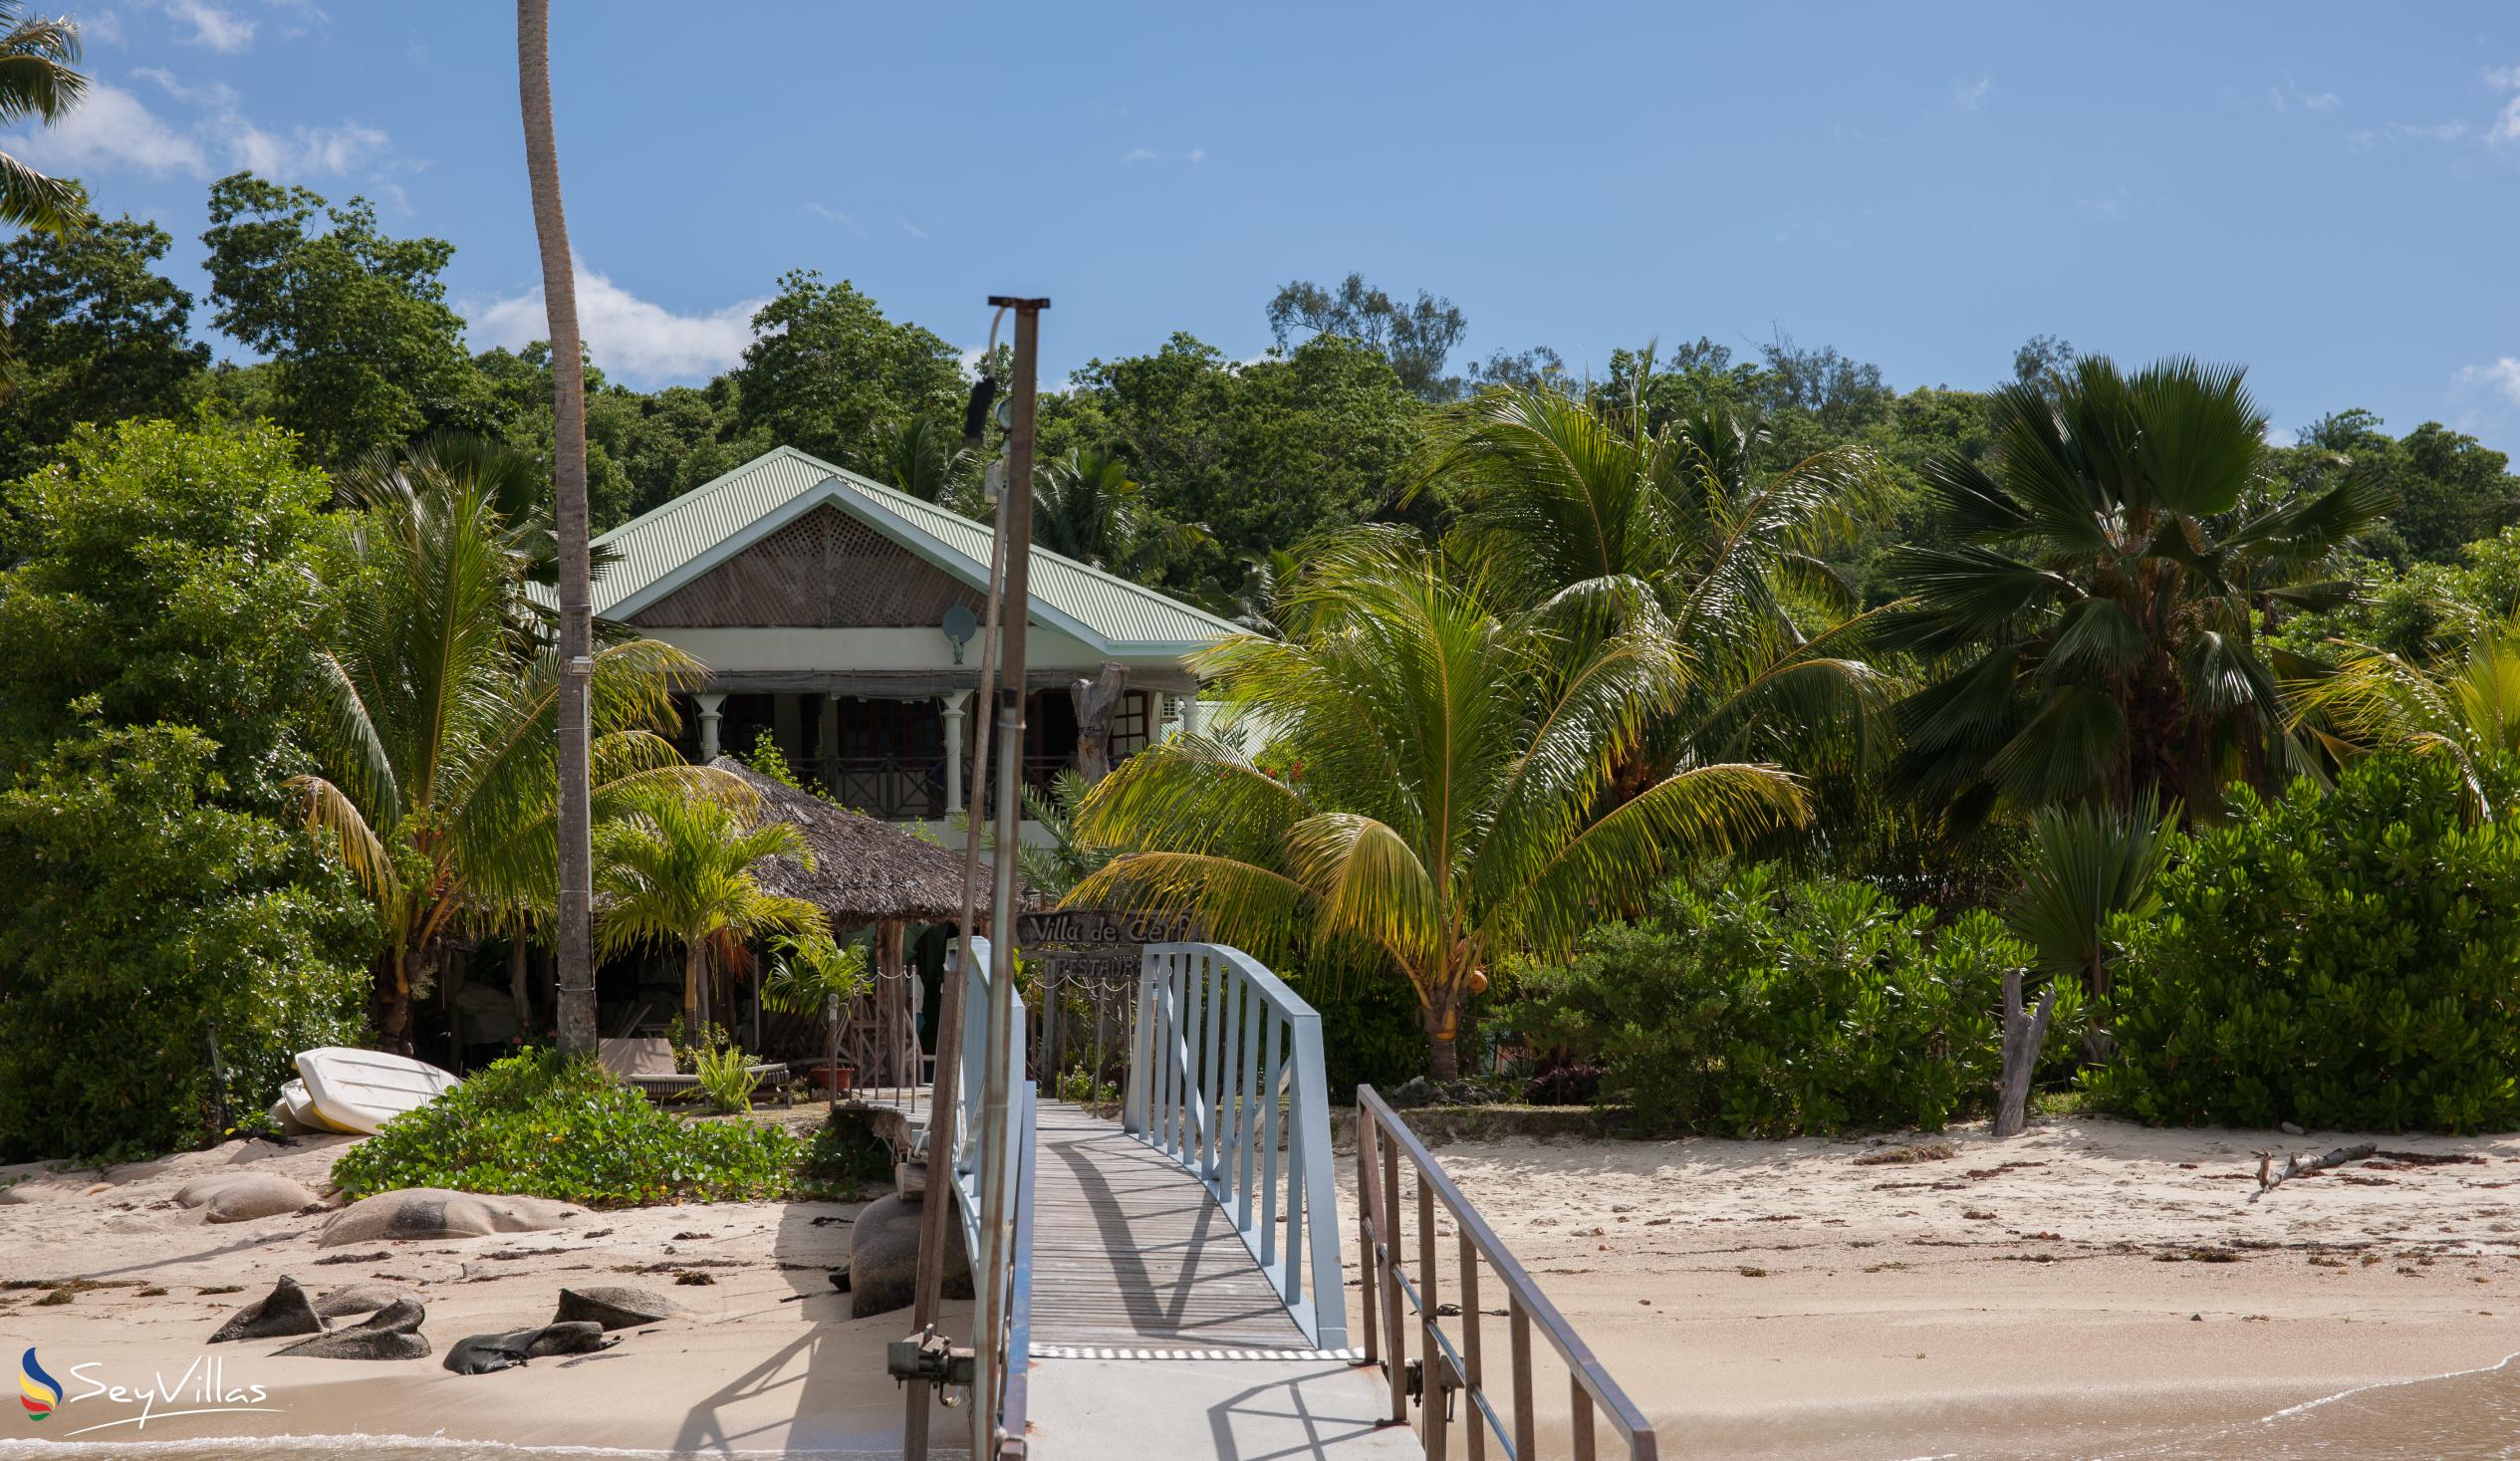 Foto 45: Villa de Cerf - Location - Cerf Island (Seychelles)